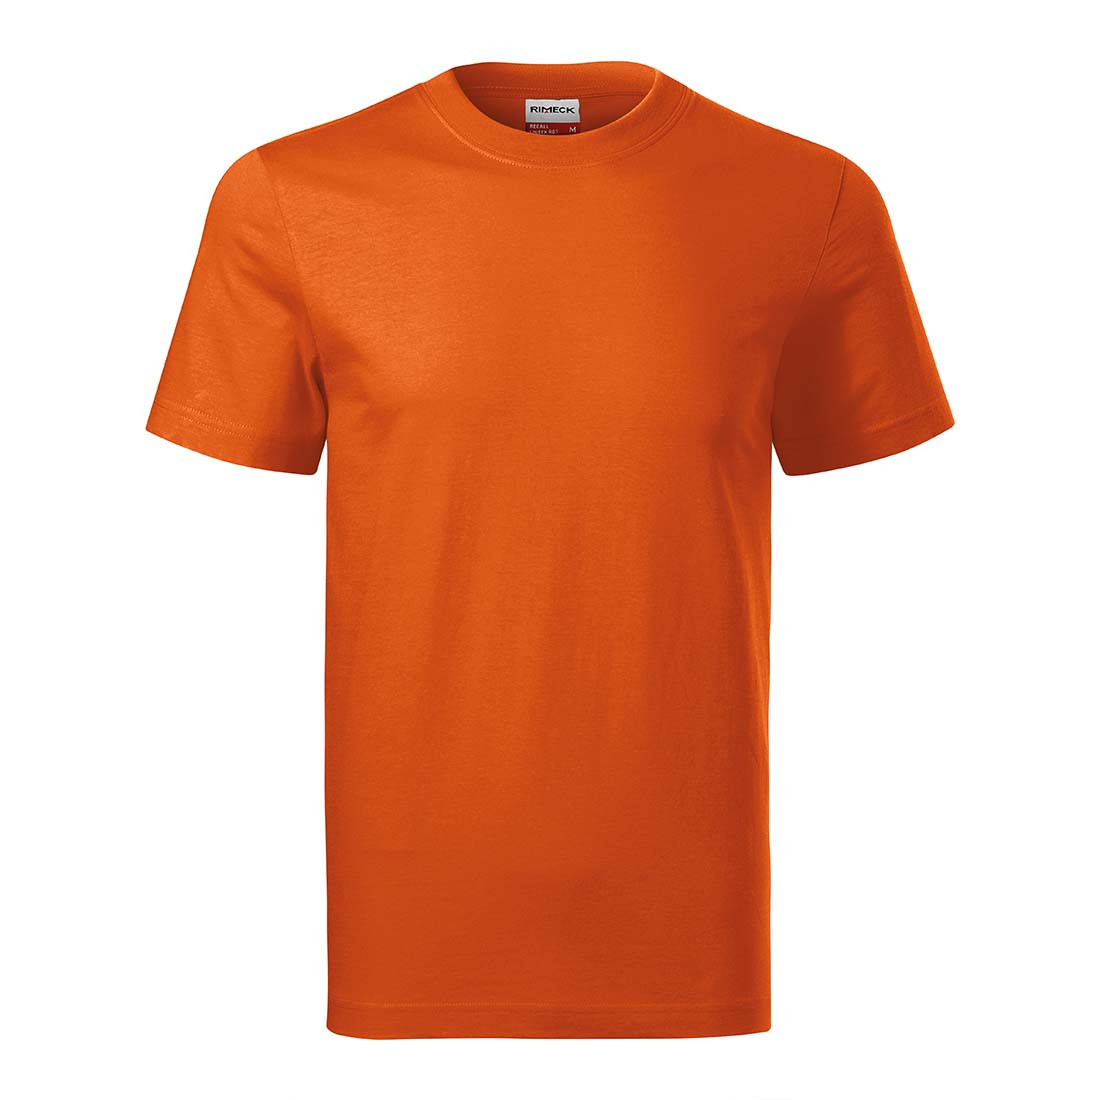 RECALL Unisex T-Shirt - Arbeitskleidung